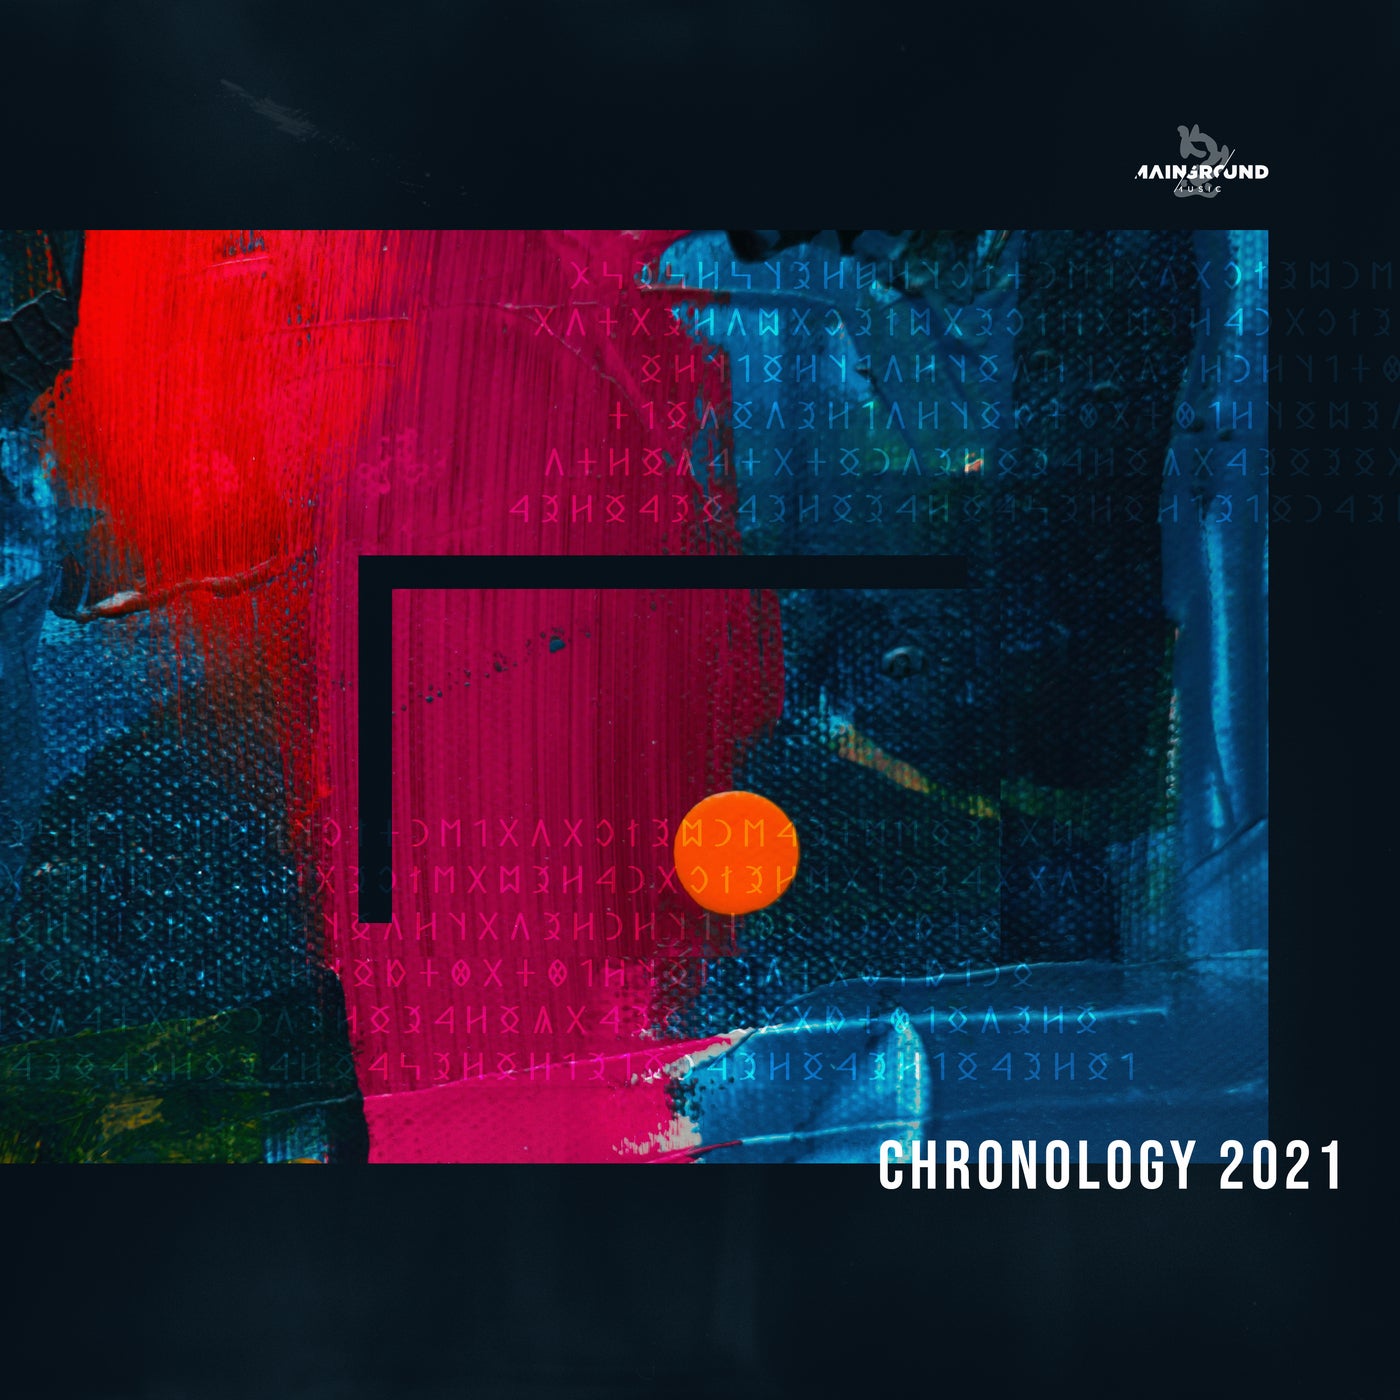 Chronology 2021